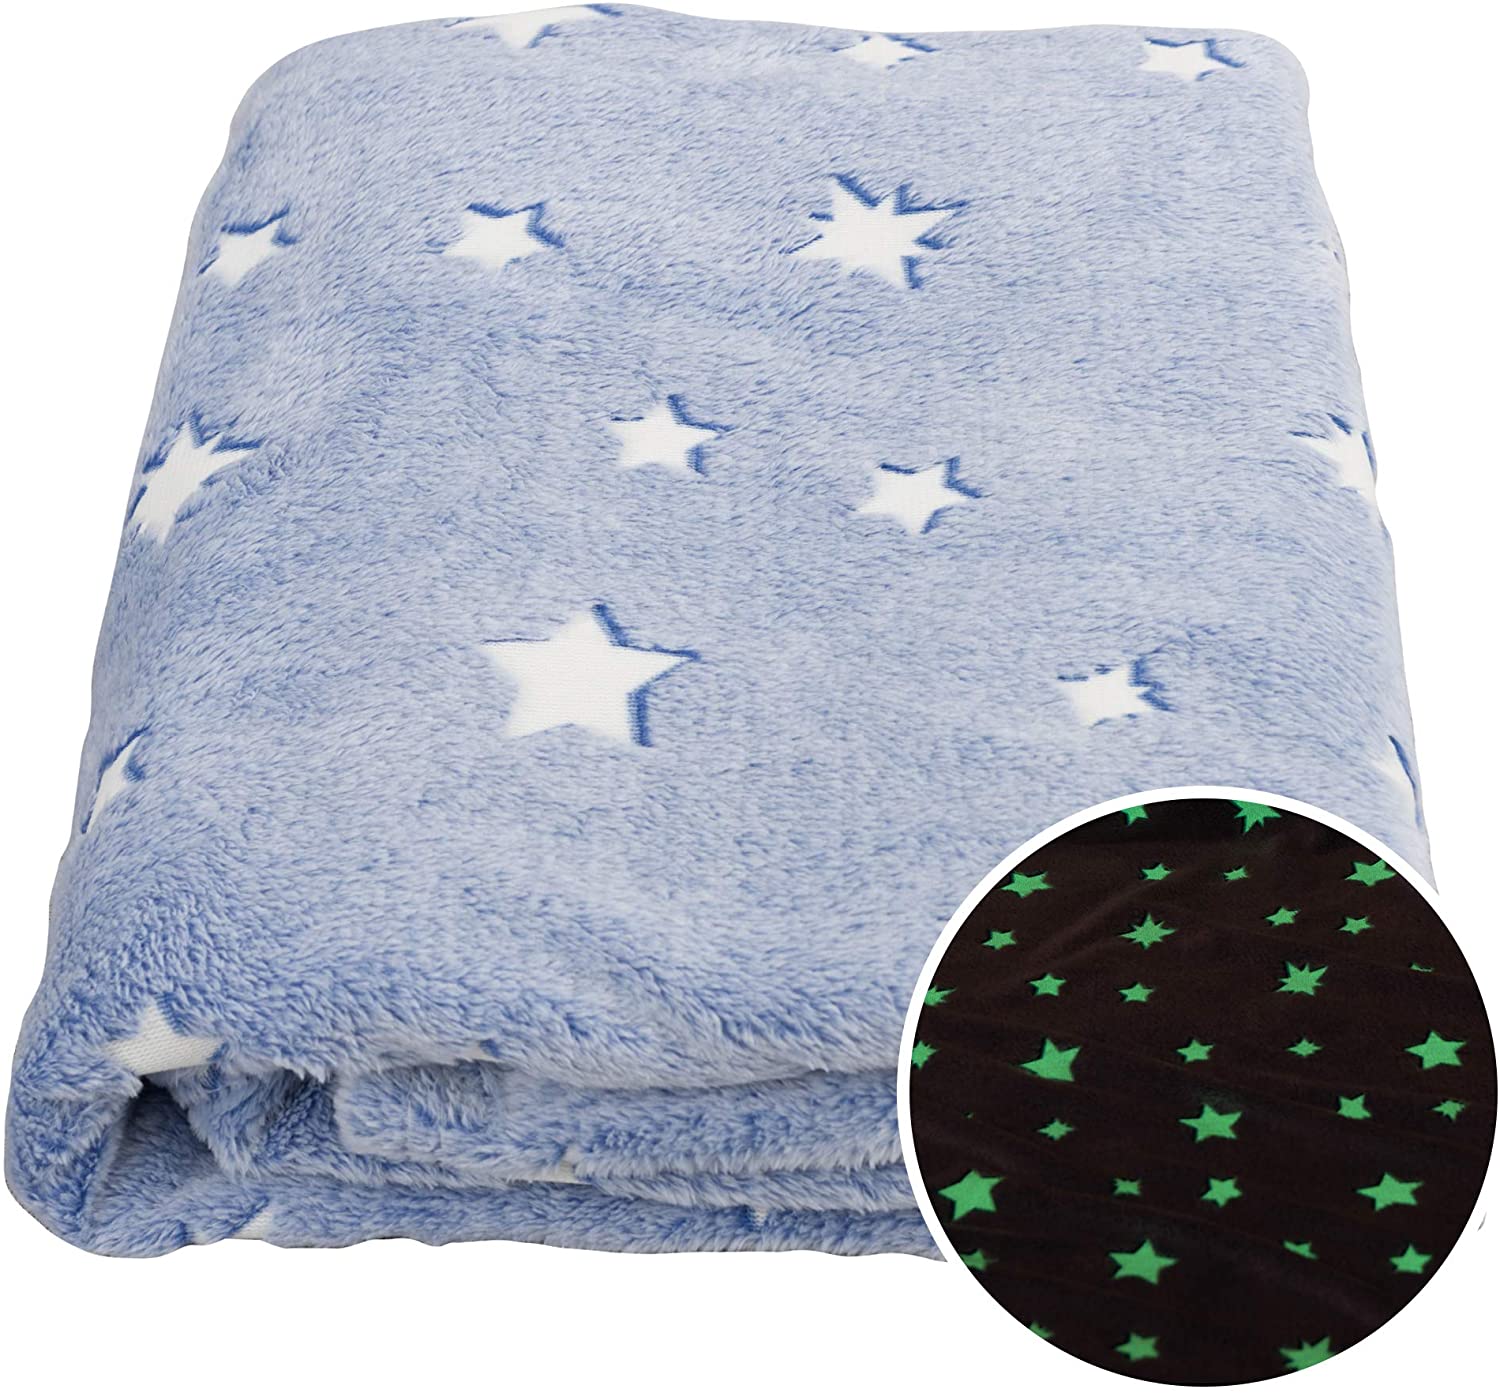 Glow in The Dark Throw Blanket Soft Plush Blanket Fun Gift for Kids Girls Boys 